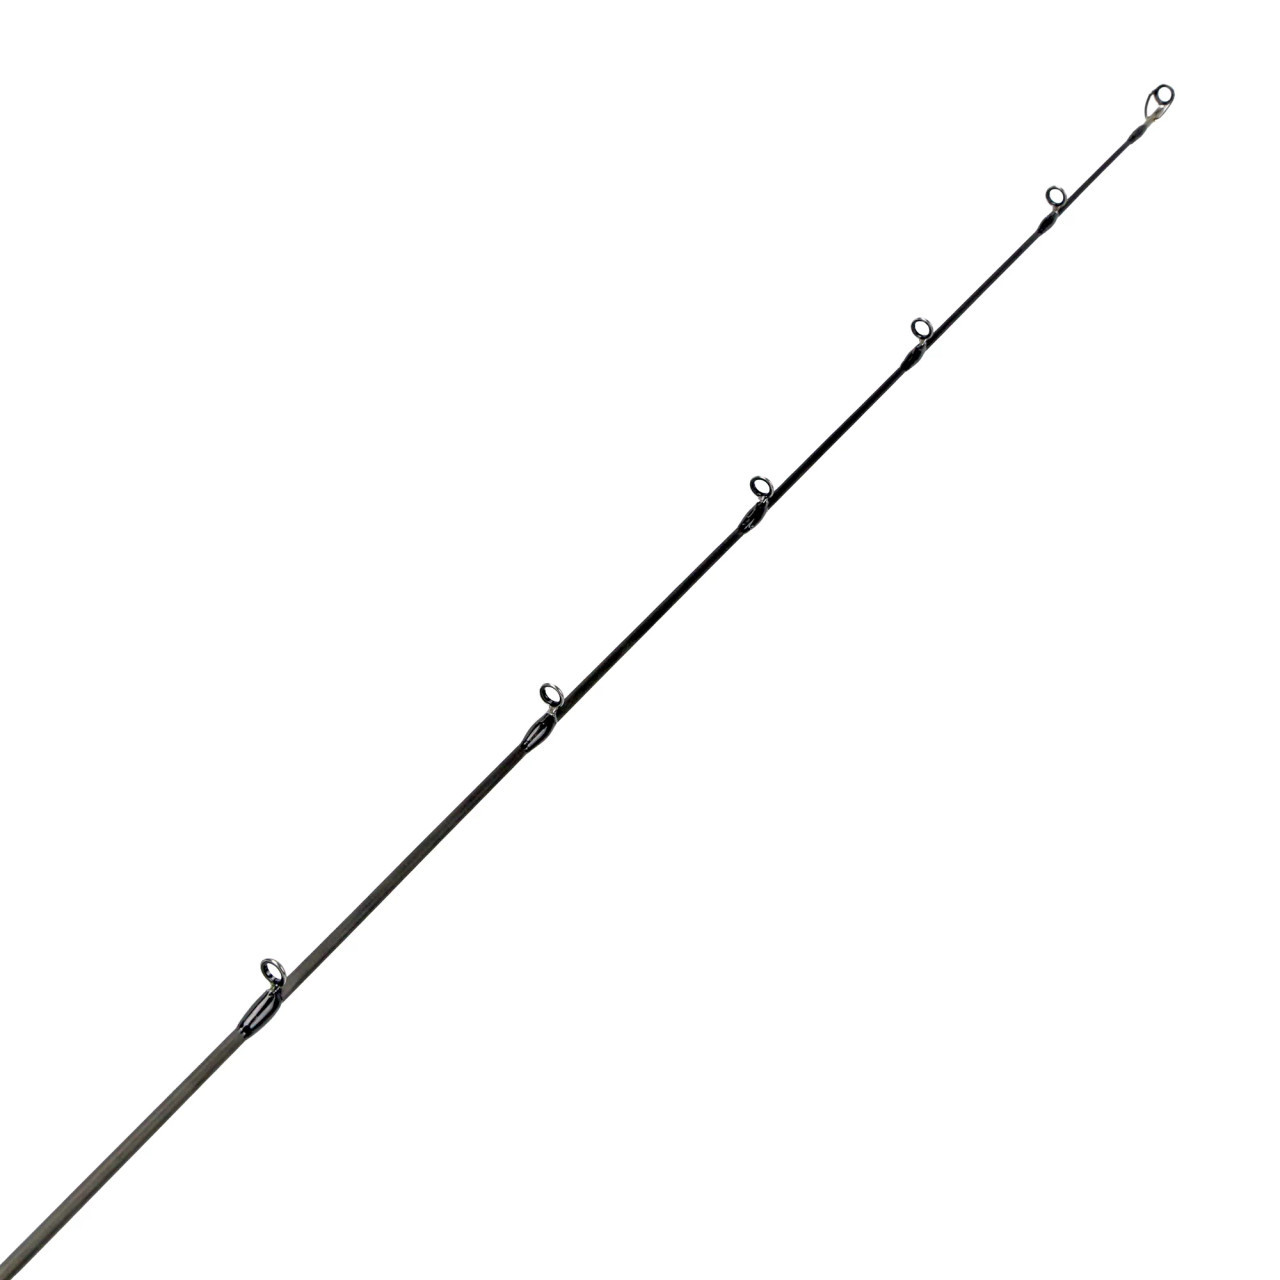 Okuma X-Series Salmon & Steelhead Rods